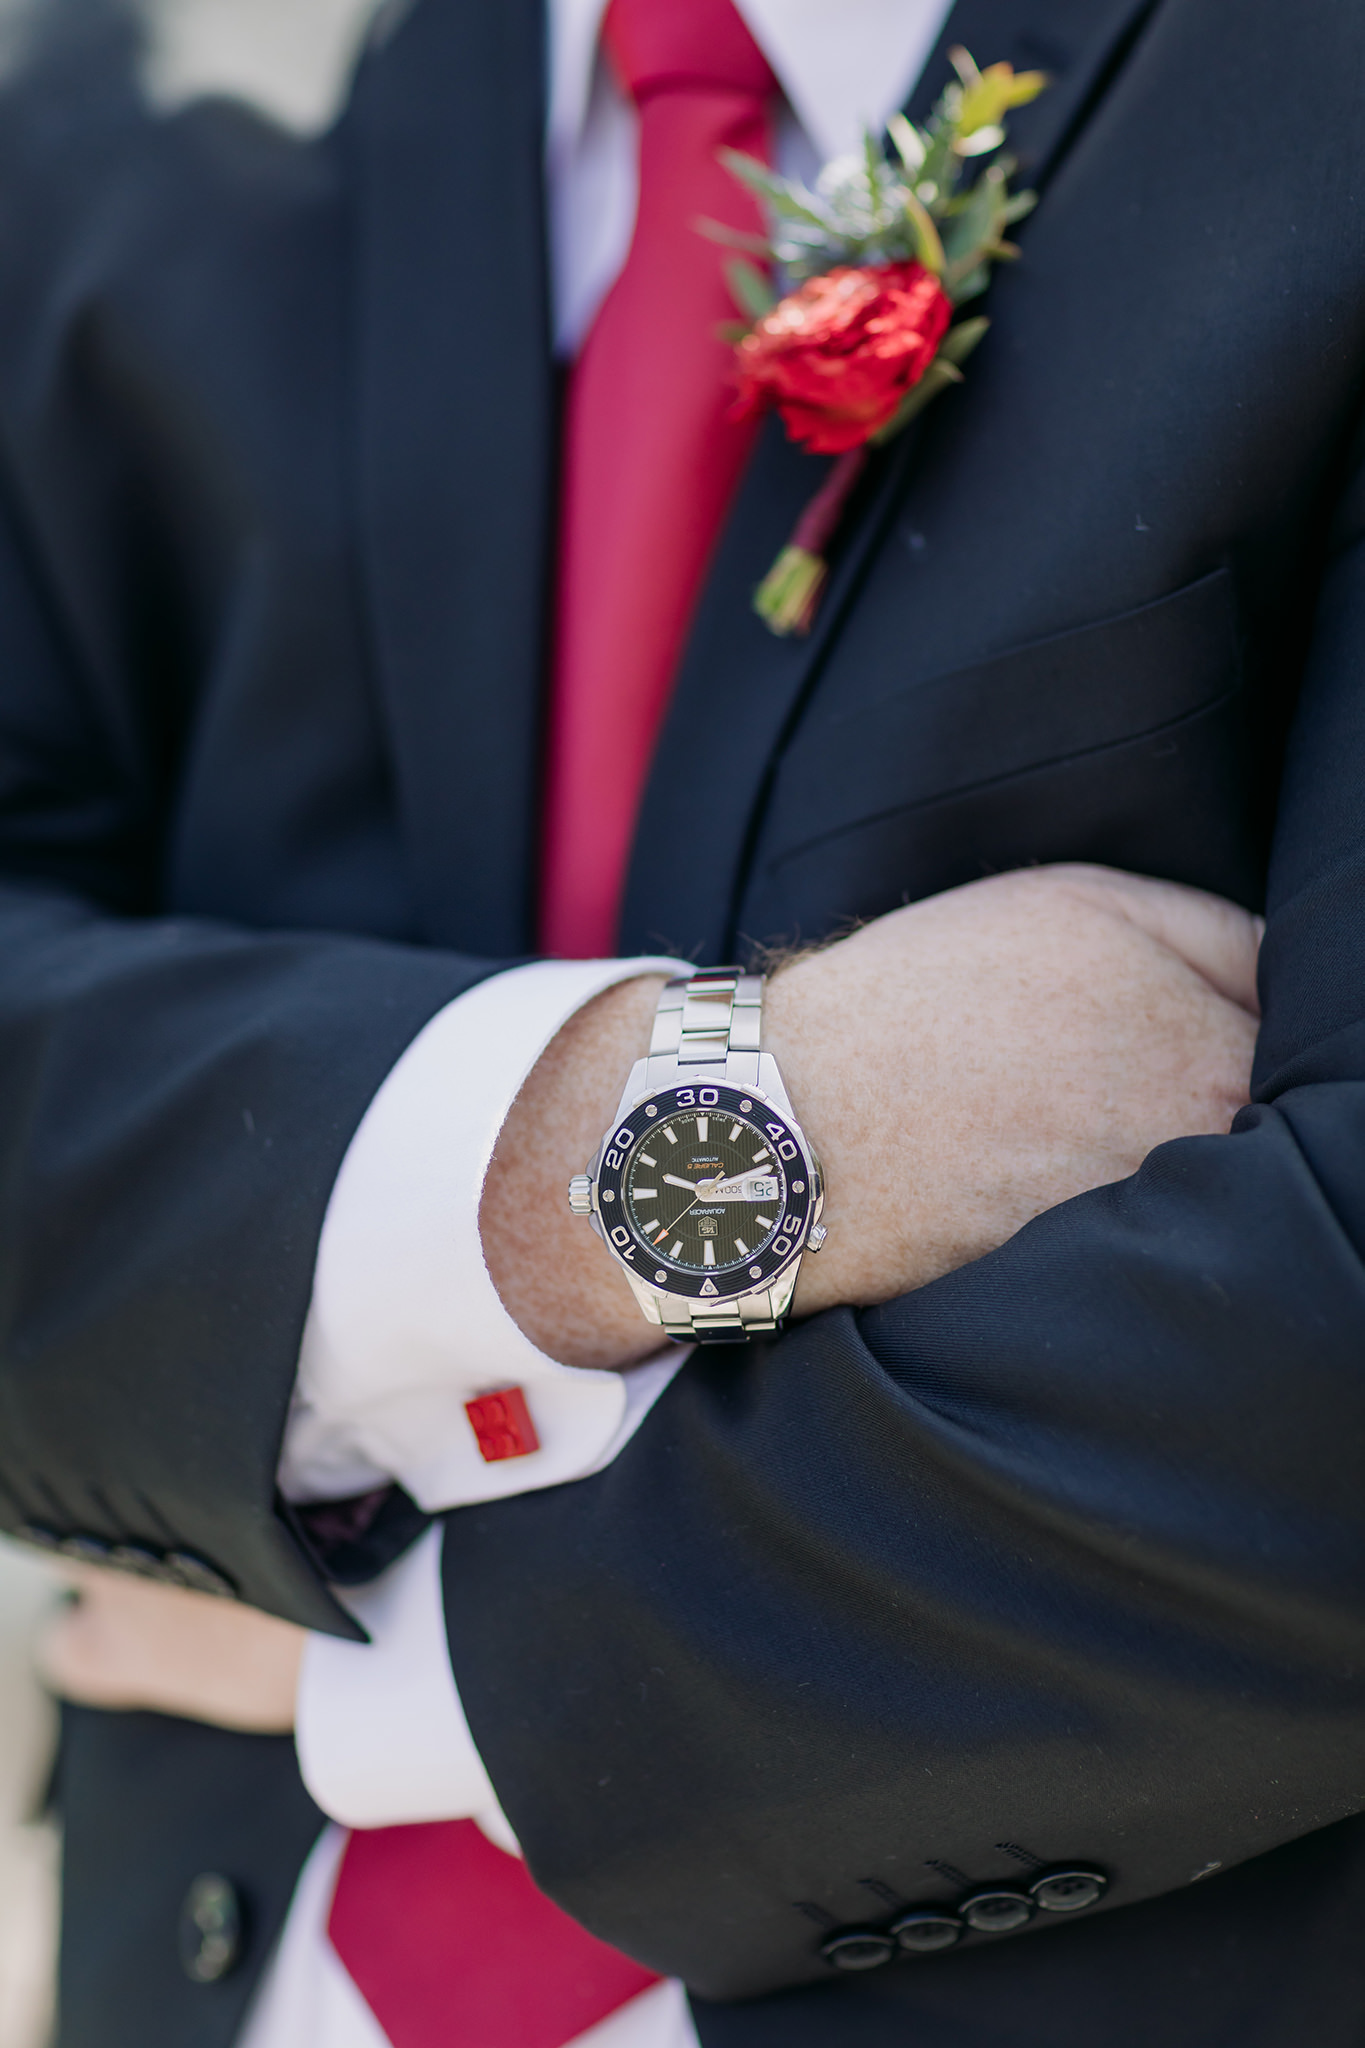 groom wedding details lego cuff links, watch & red boutonniere